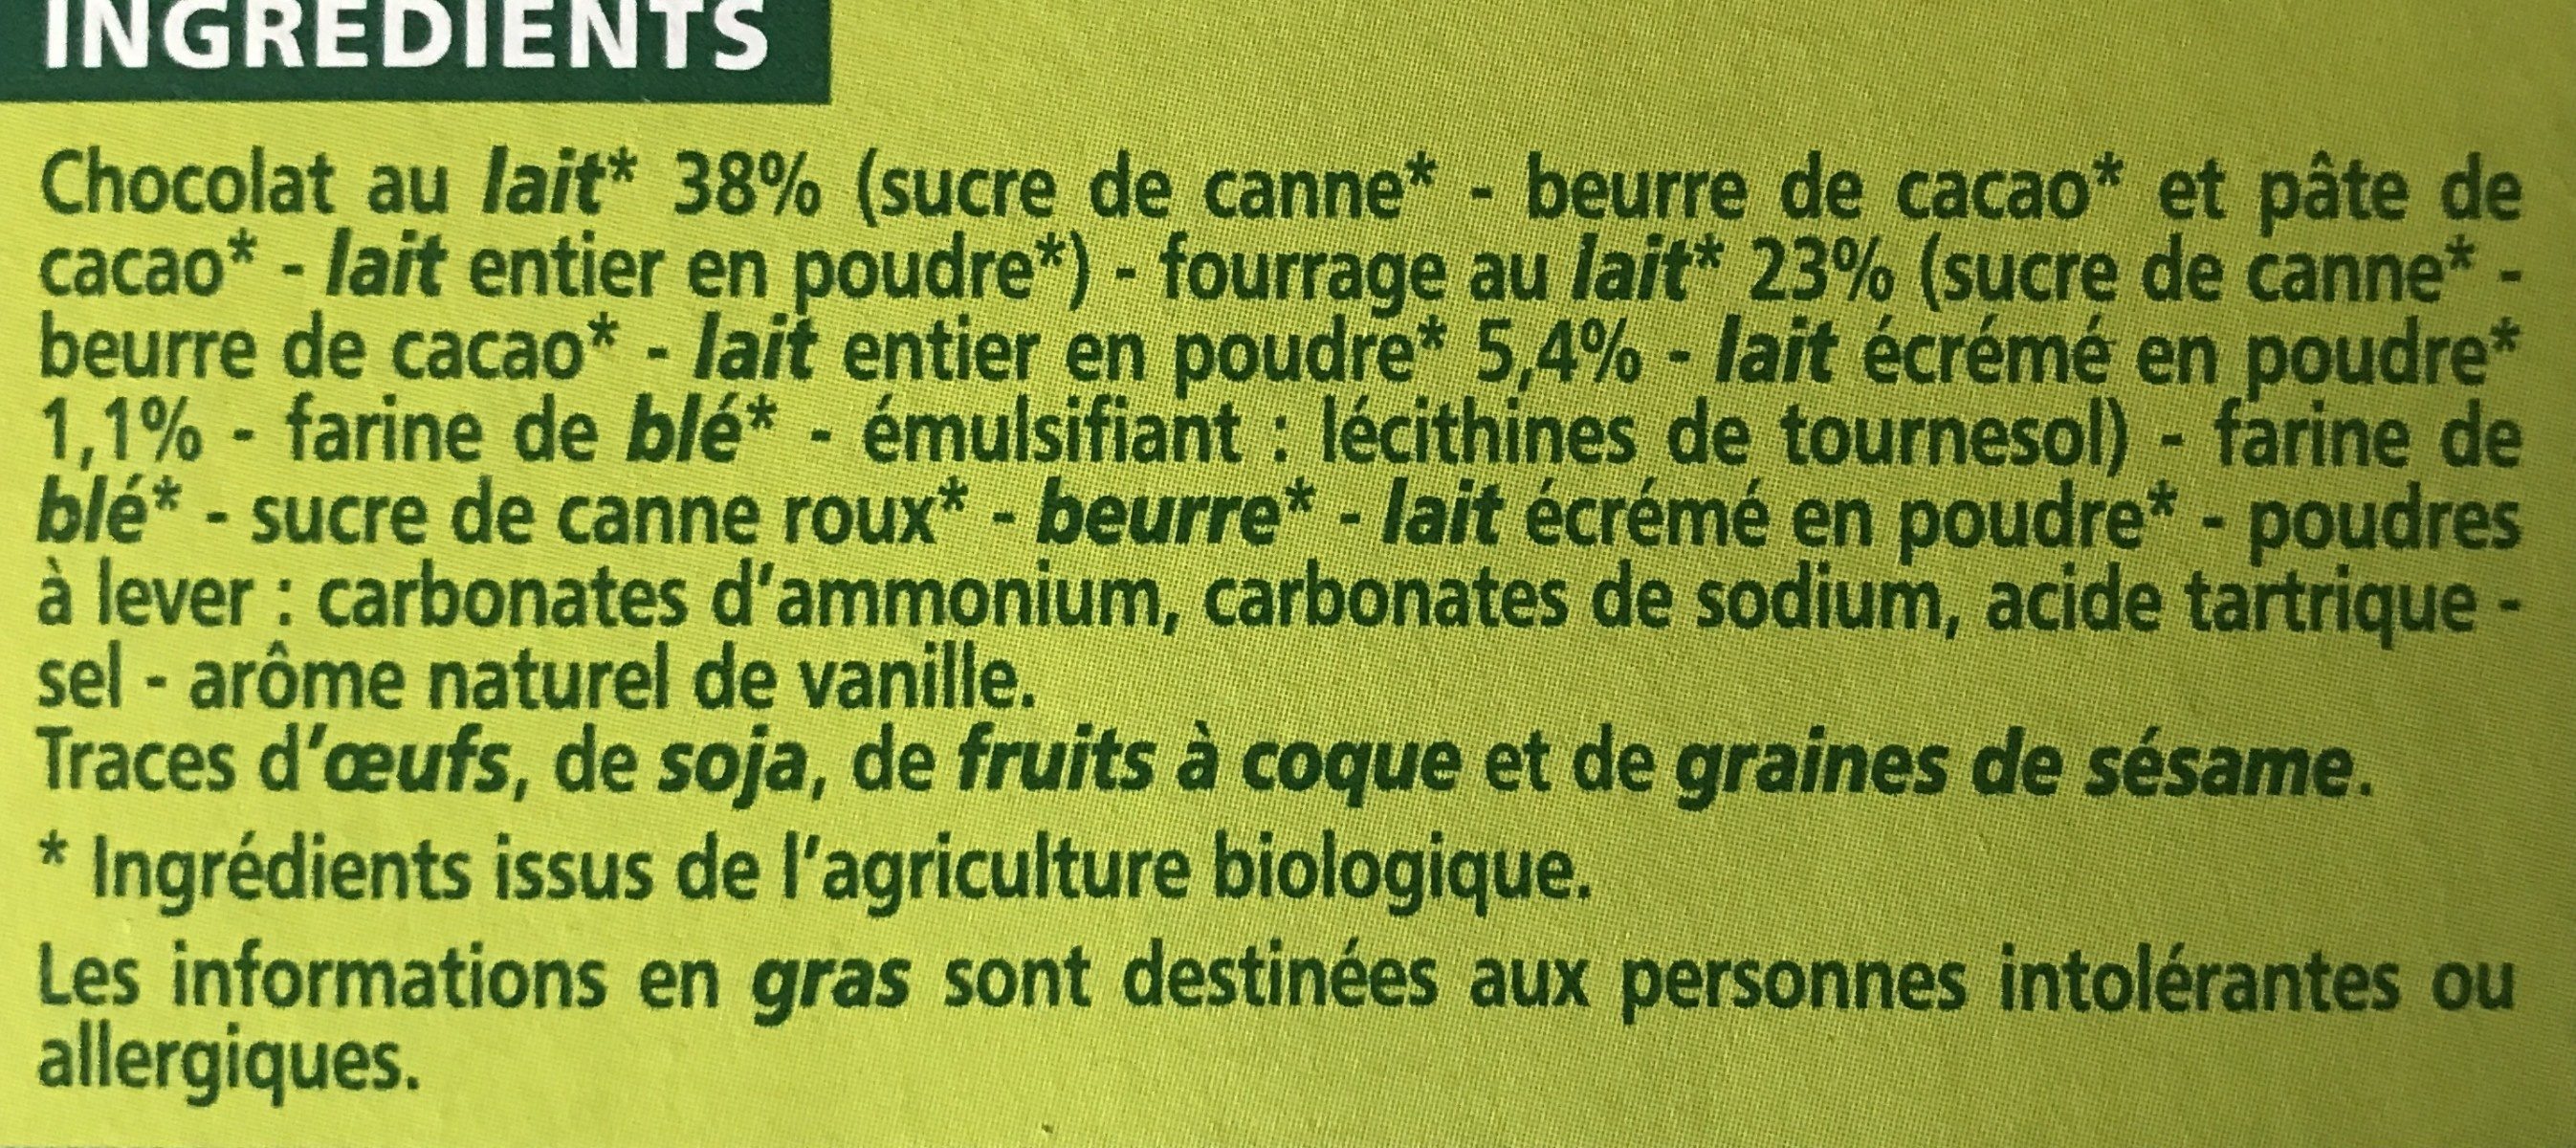 P'tits biscuits fourrage au lait - Ingredients - fr